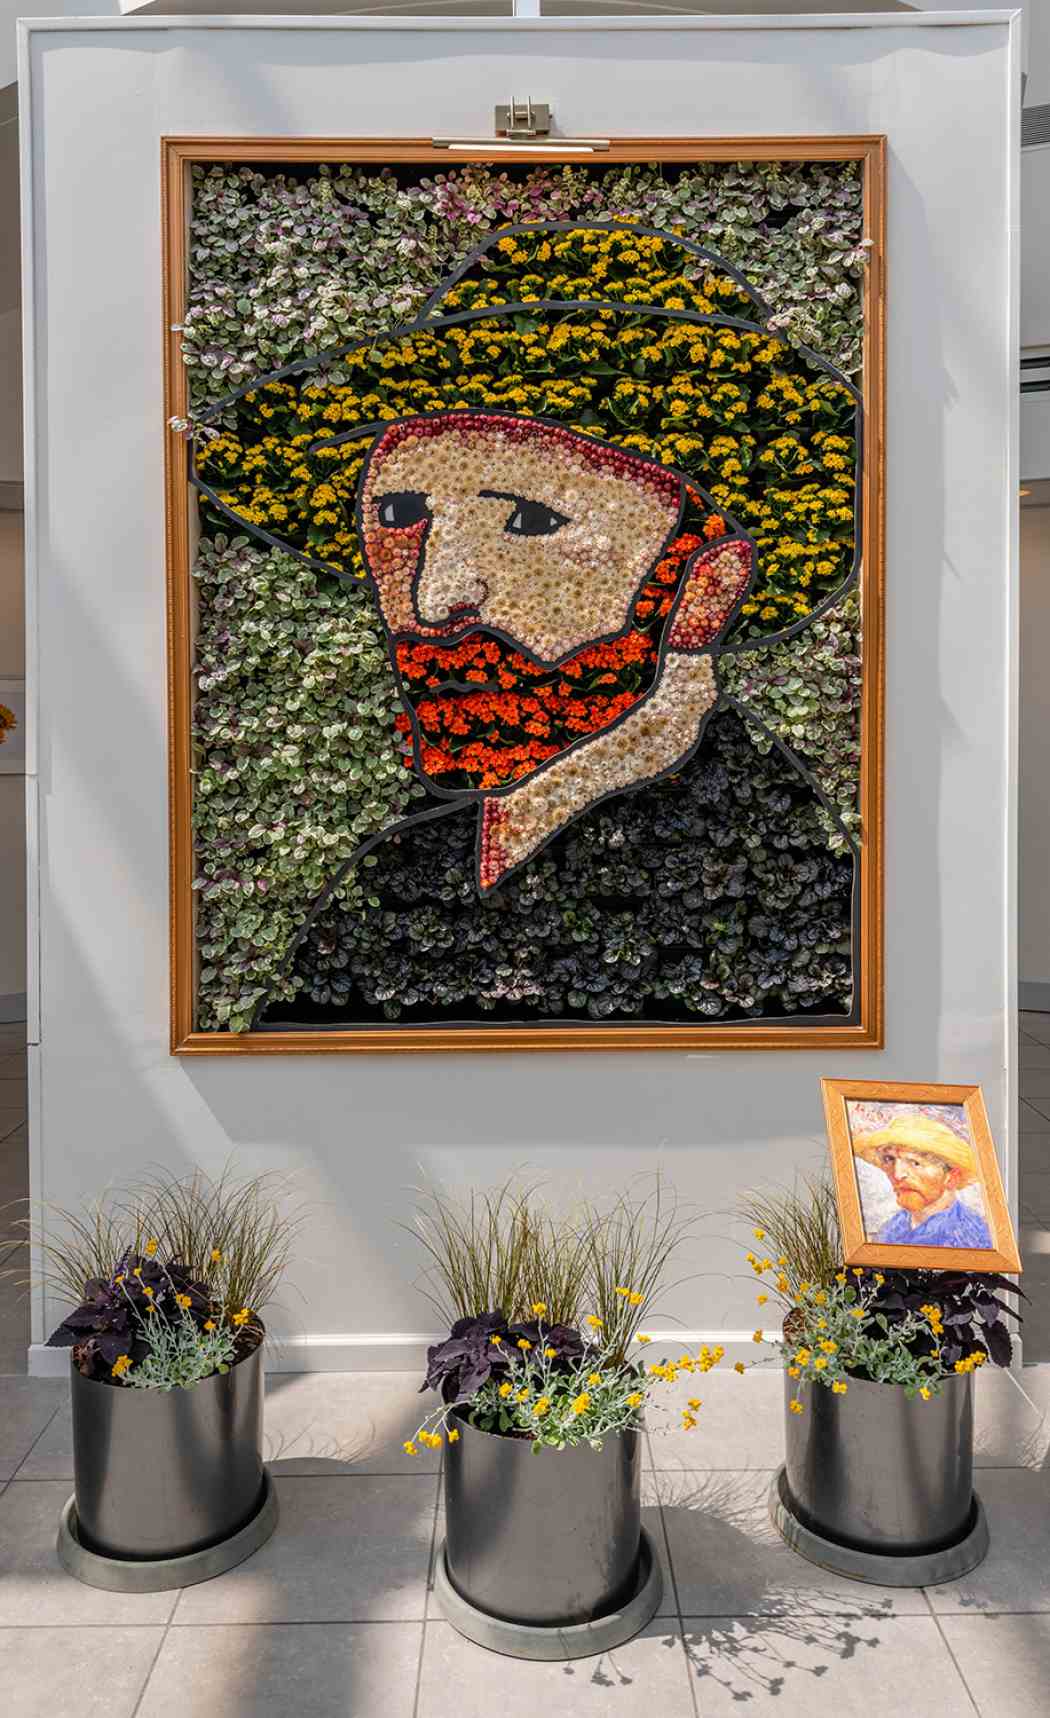 Summer Flower Show 2019: Van Gogh in Bloom